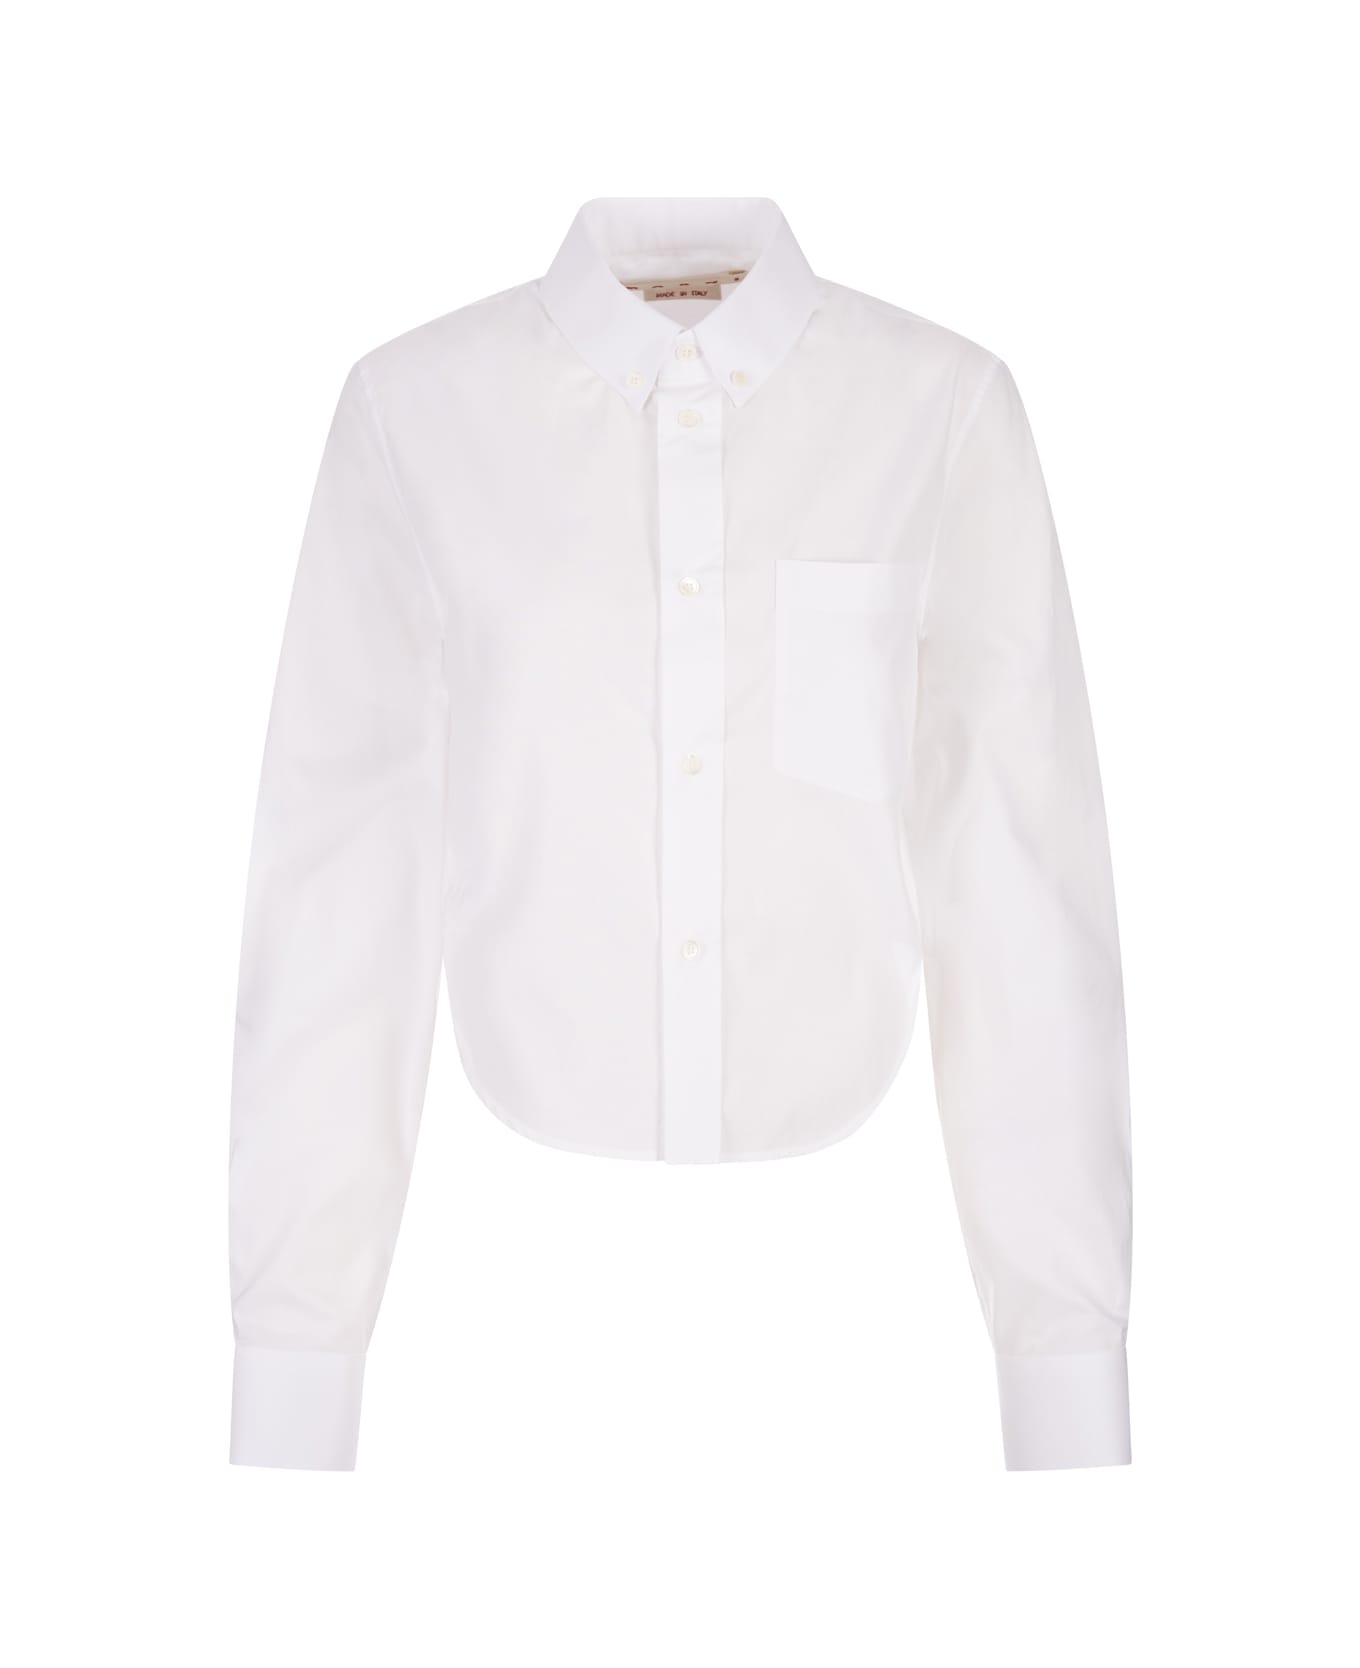 Marni Cropped Shirt In White Cotton - White